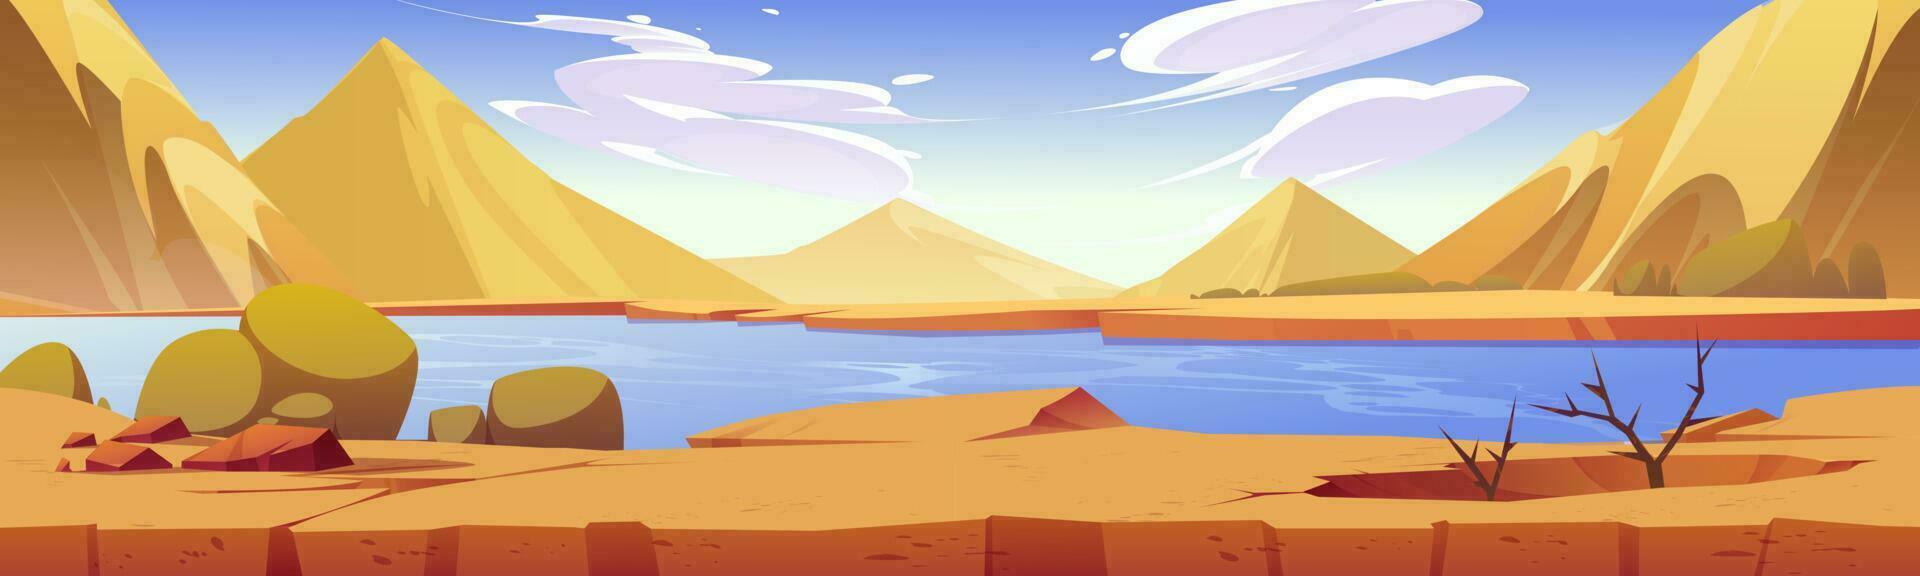 Desert river landscape vector cartoon background